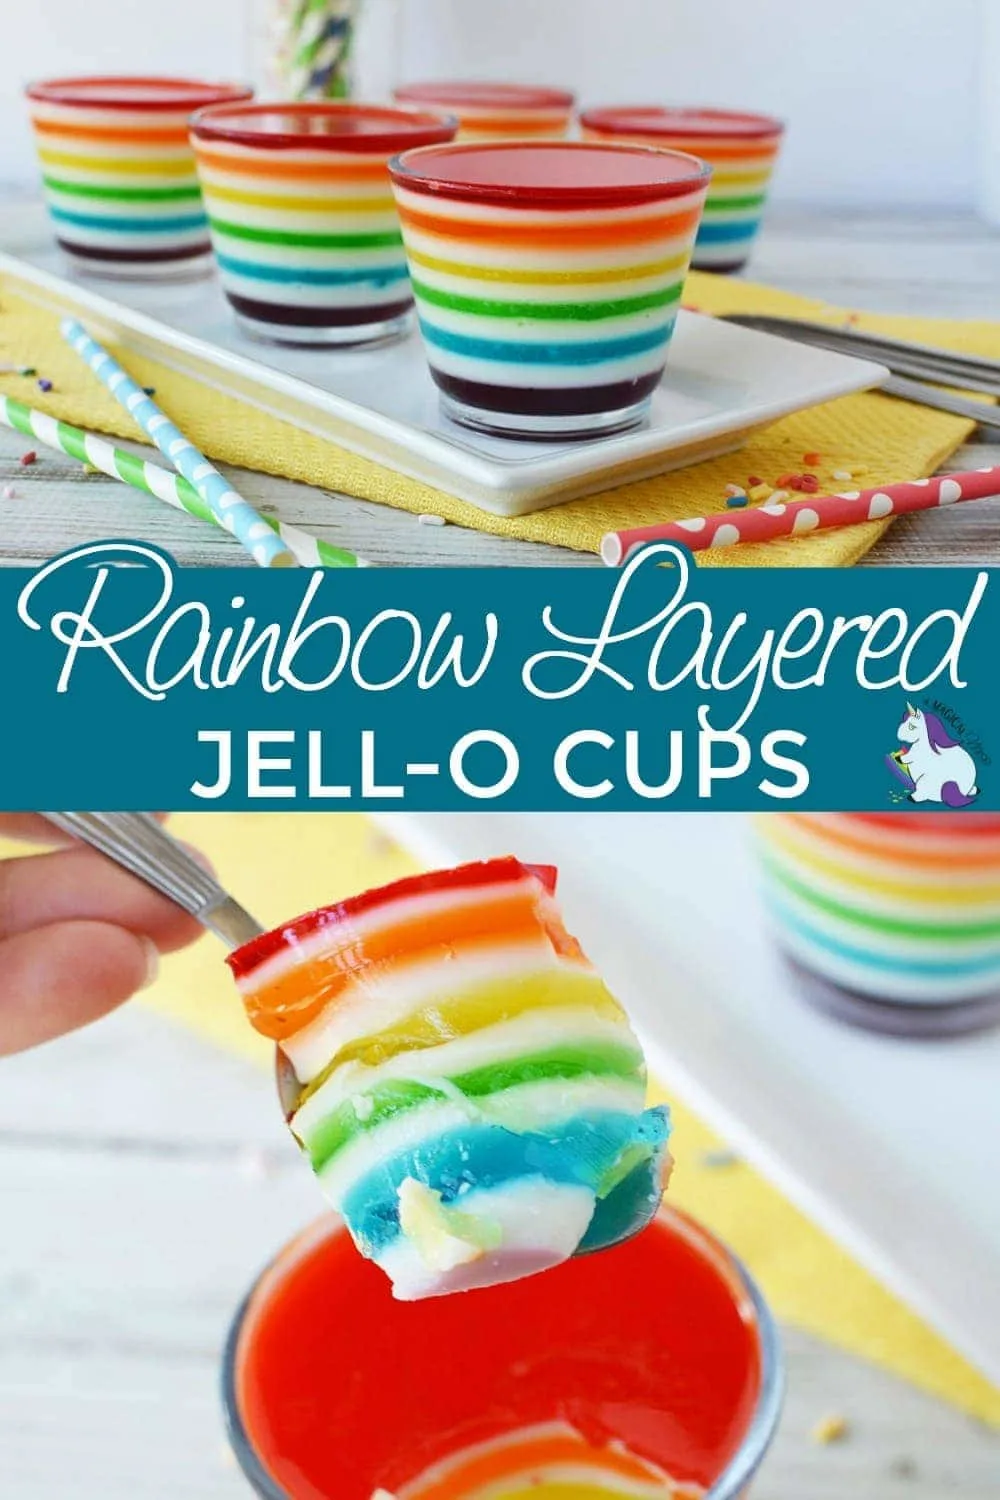 Jell-o layered dessert cups